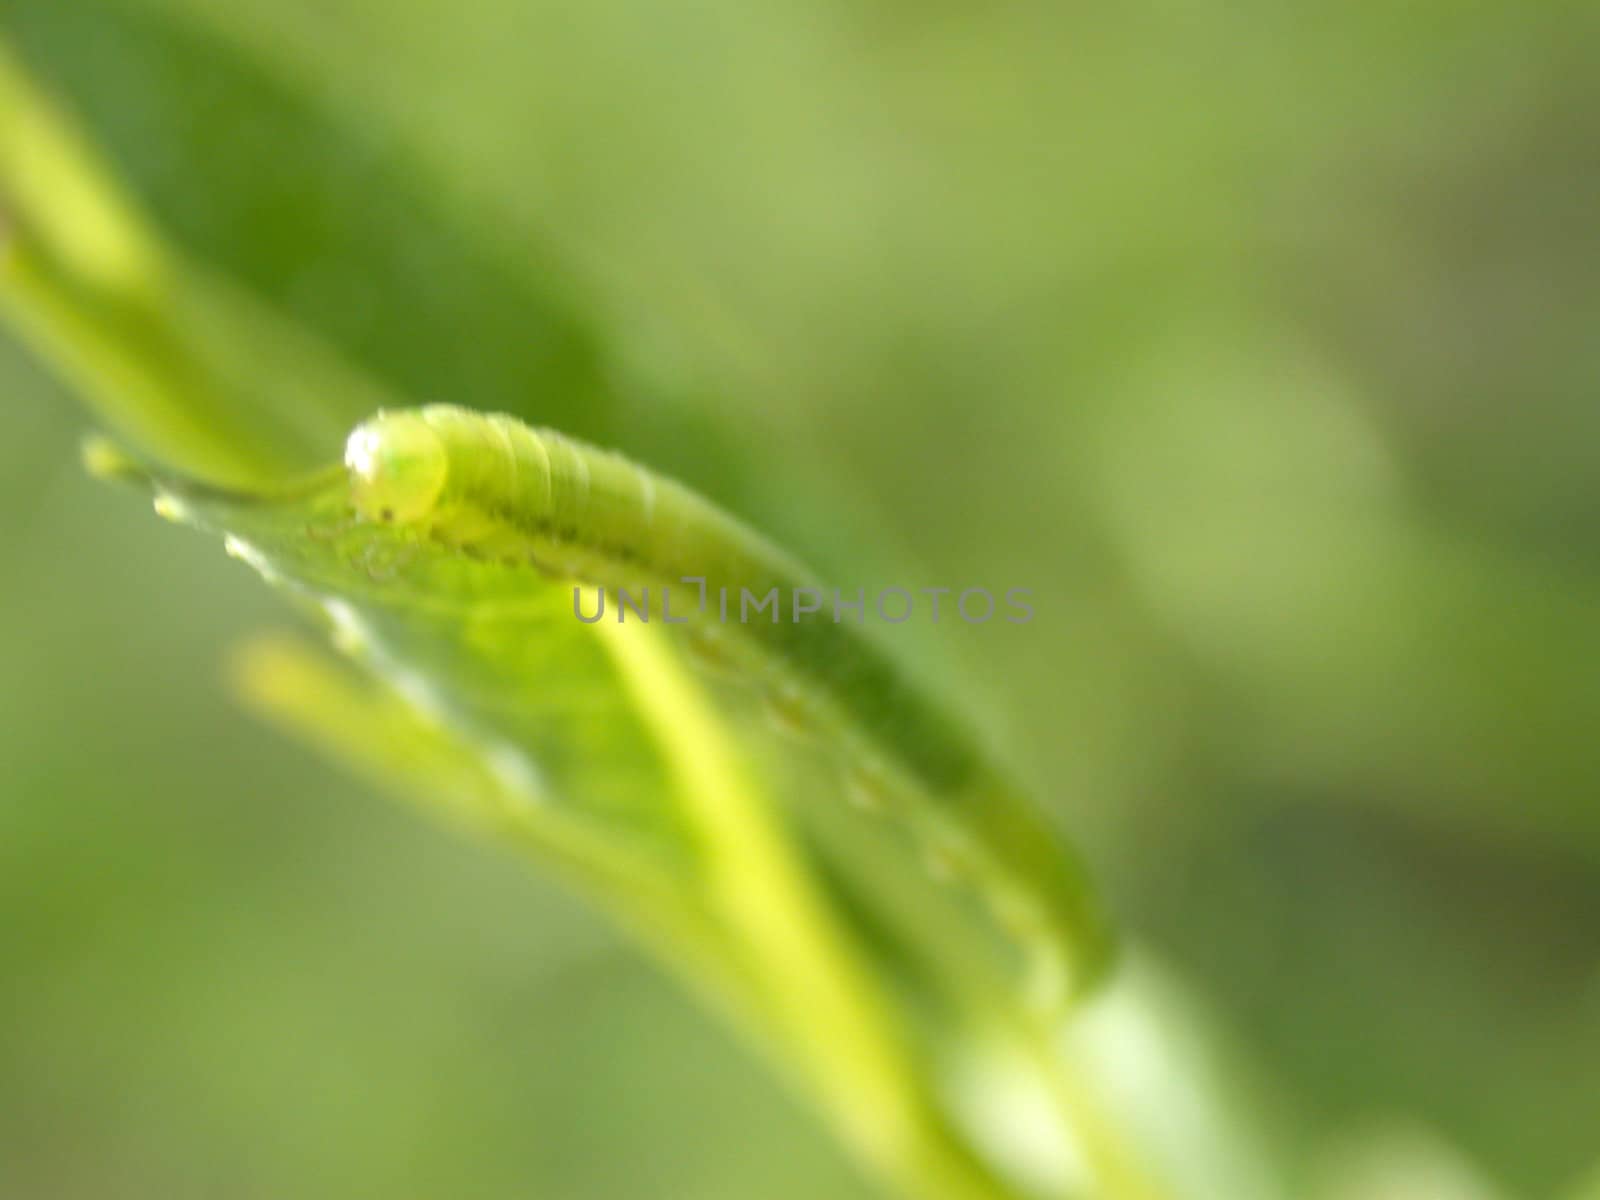 gren caterpillar on green leaf